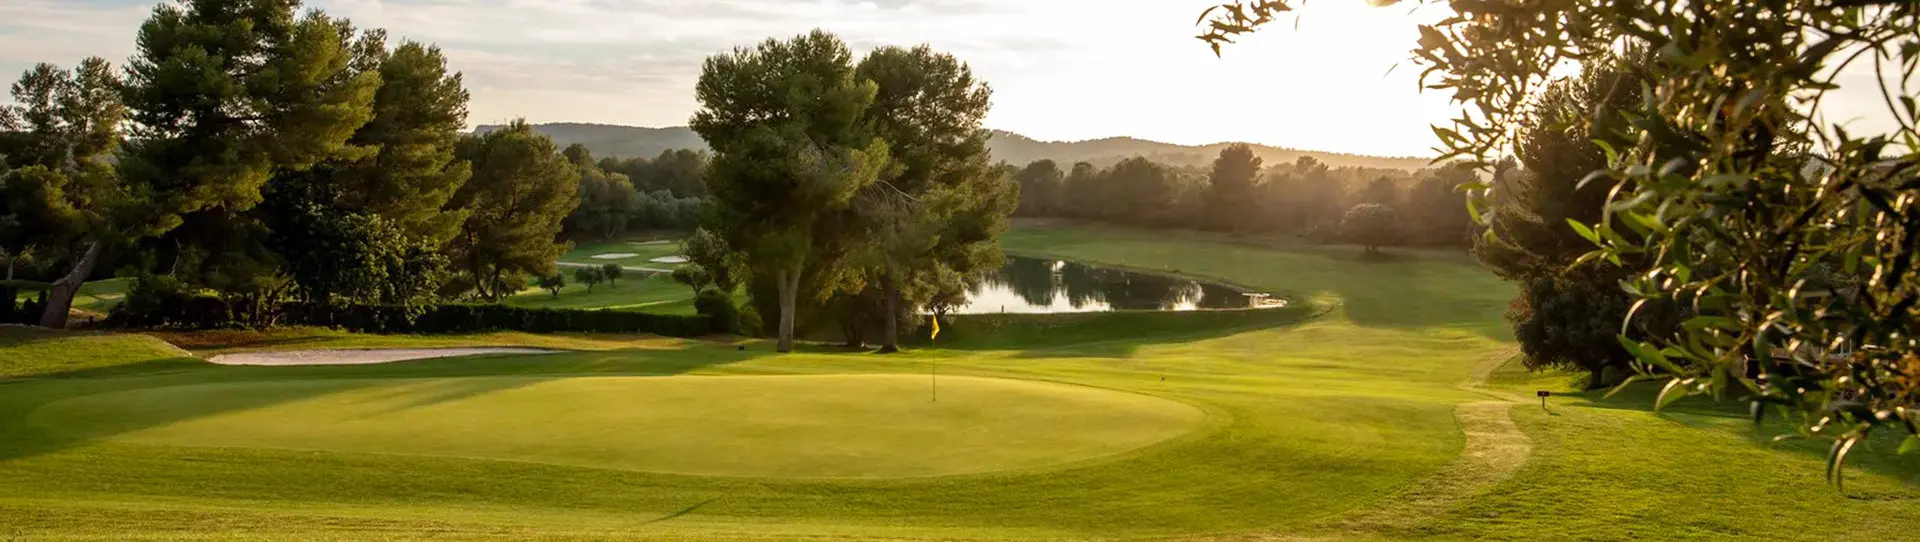 Spain golf courses - Costa Daurada Tarragona Golf Course - Photo 2